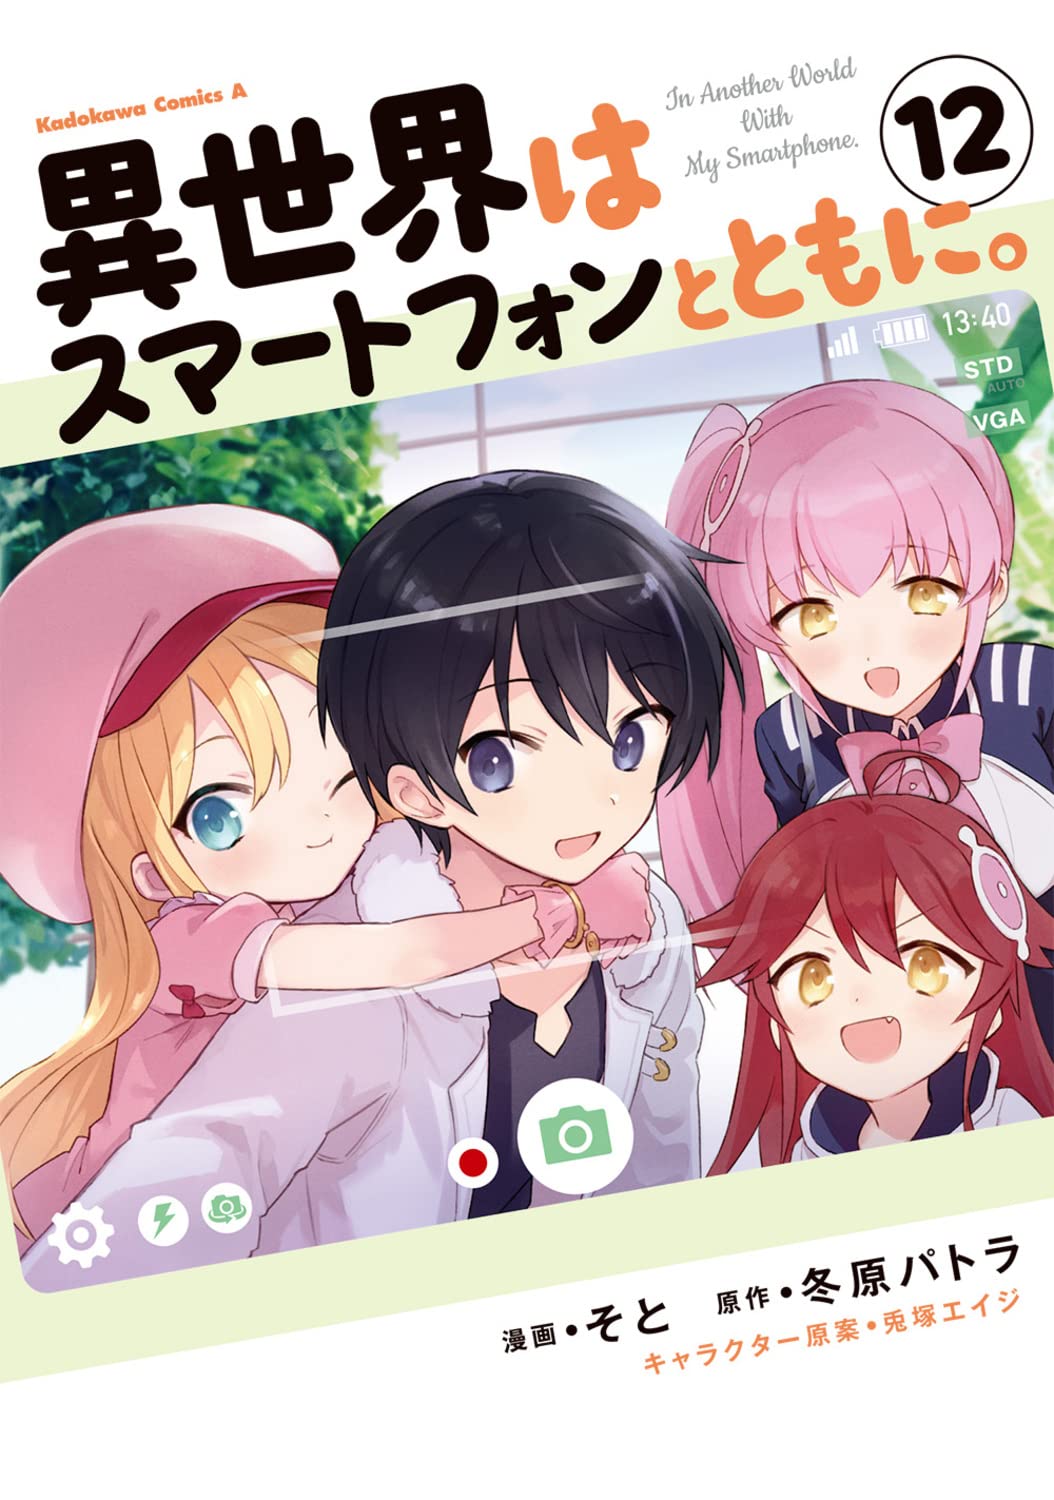 Anime : Isekai wa smartphone to tomo ni - Mangás & Animes - WebCheats